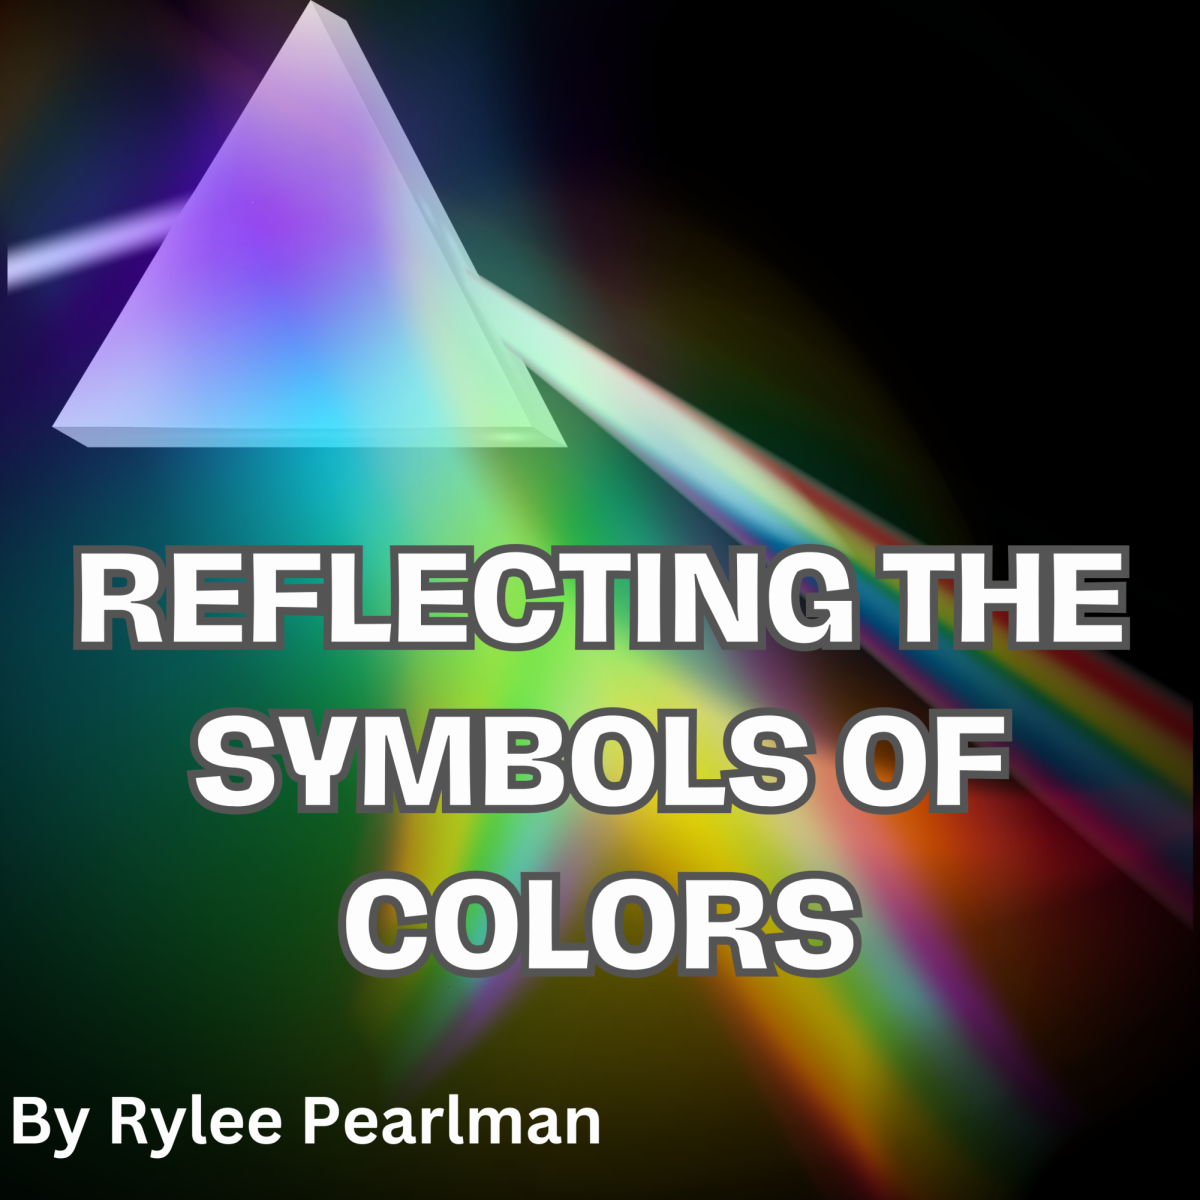 Exploring My Color Symbolism